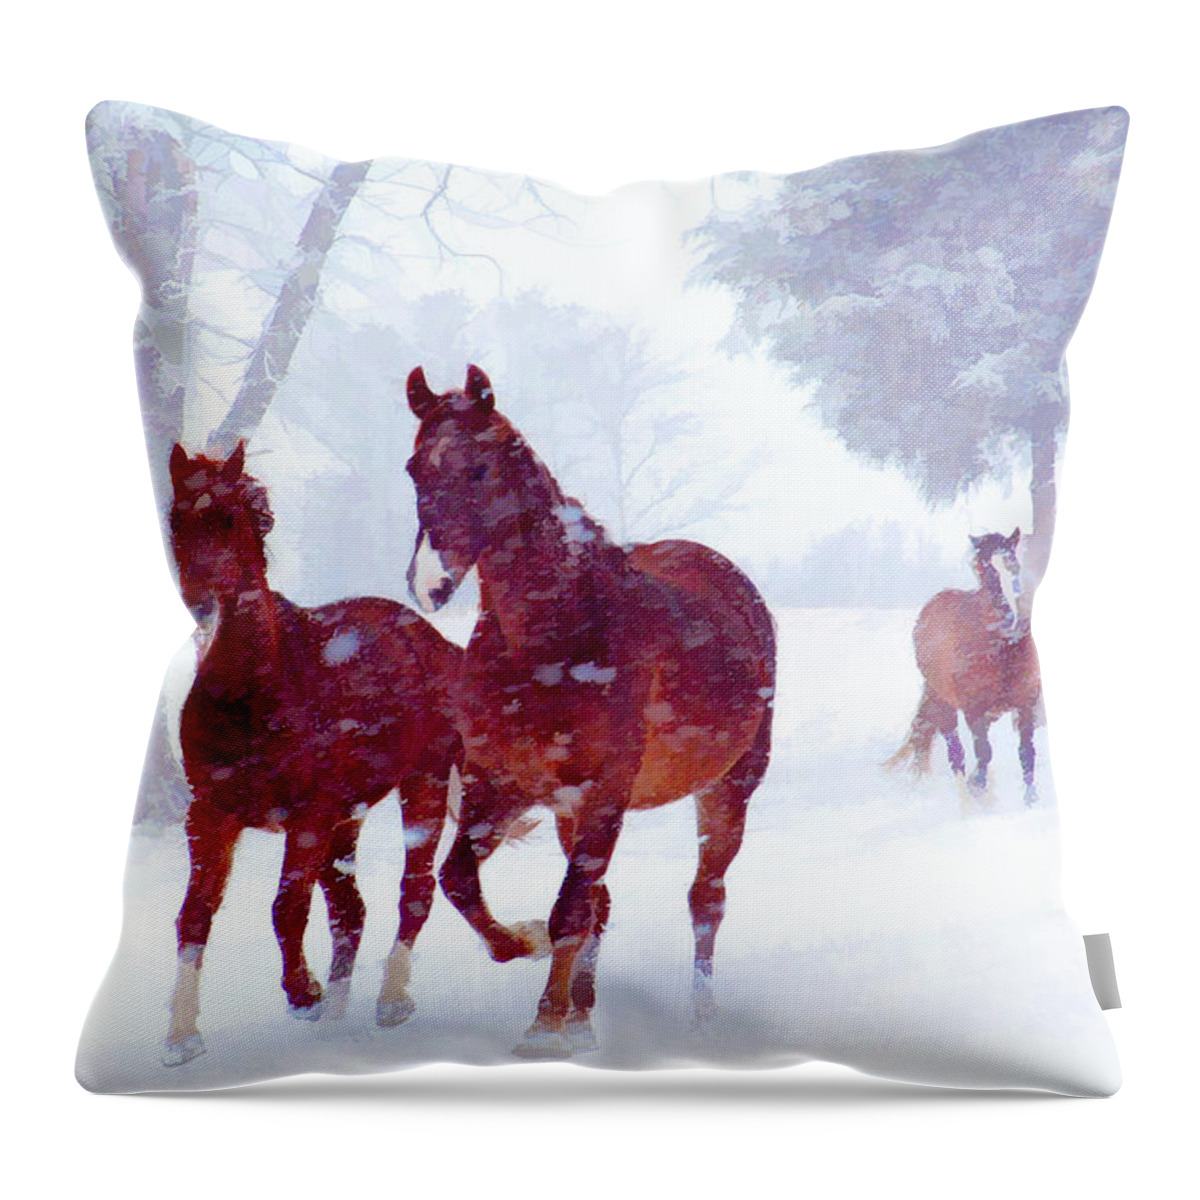 Horse Throw Pillow featuring the photograph Snow Run by Sam Davis Johnson